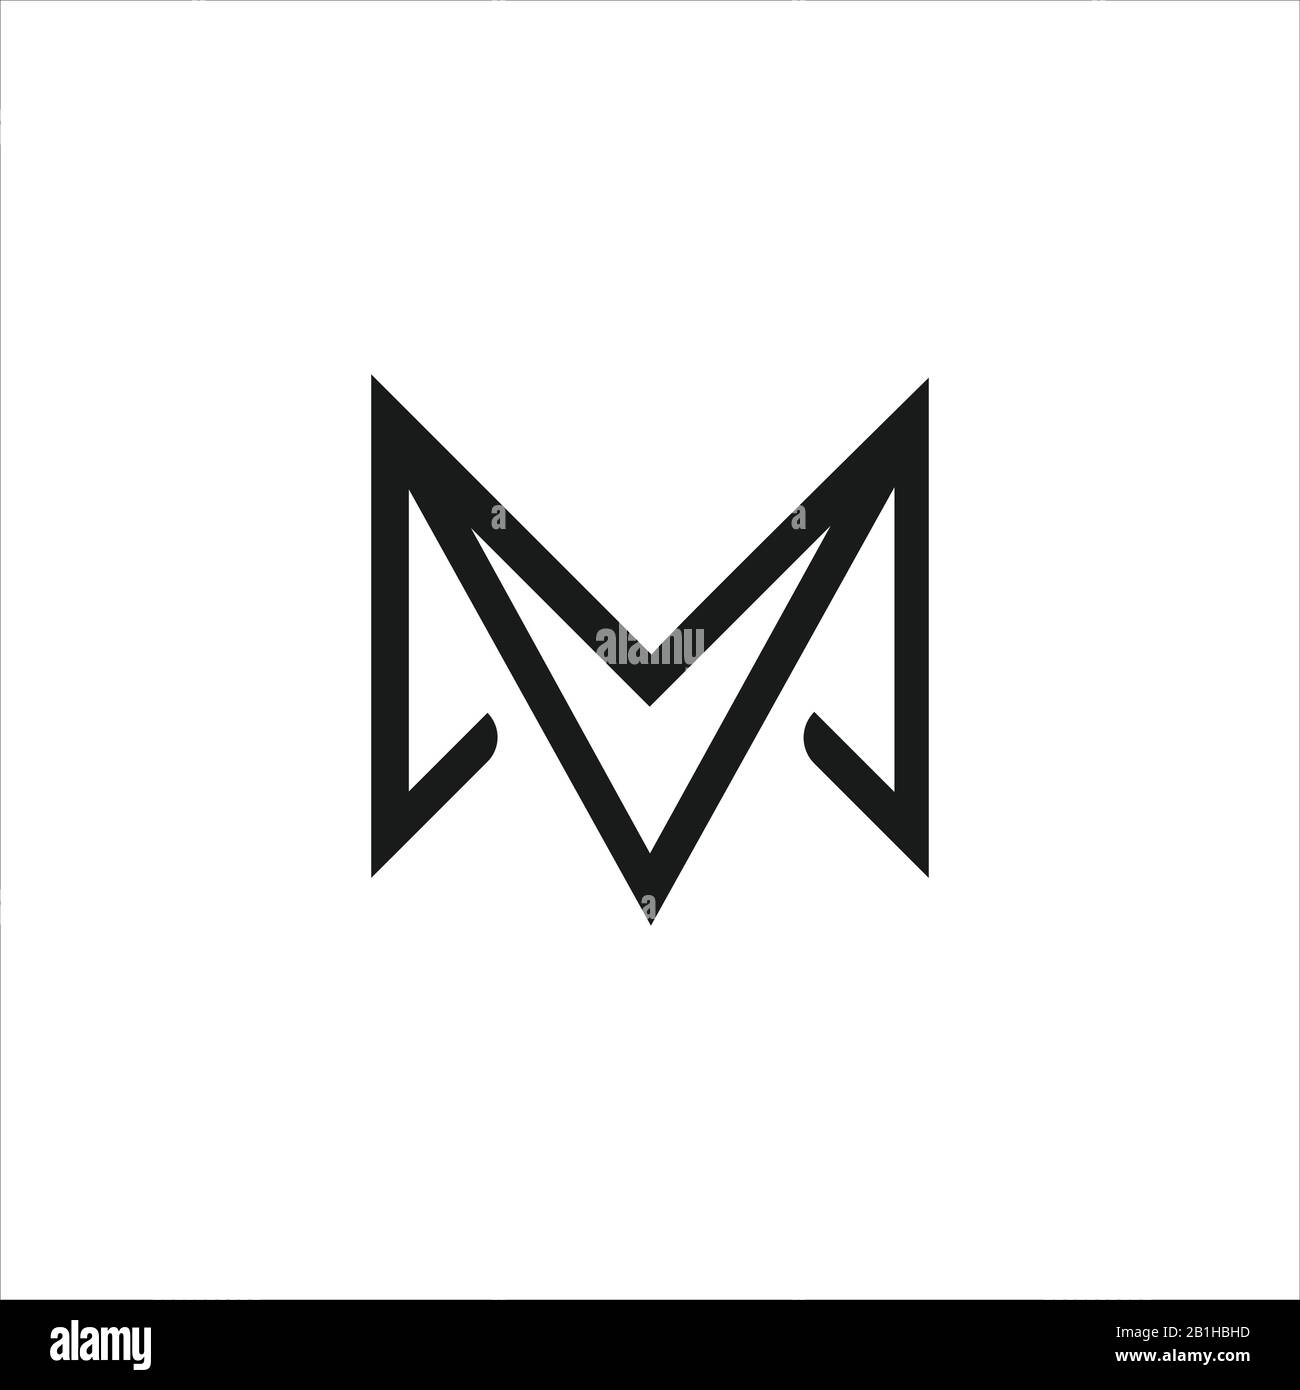 Logopond - Logo, Brand & Identity Inspiration (VM Or MV Letter Logo)